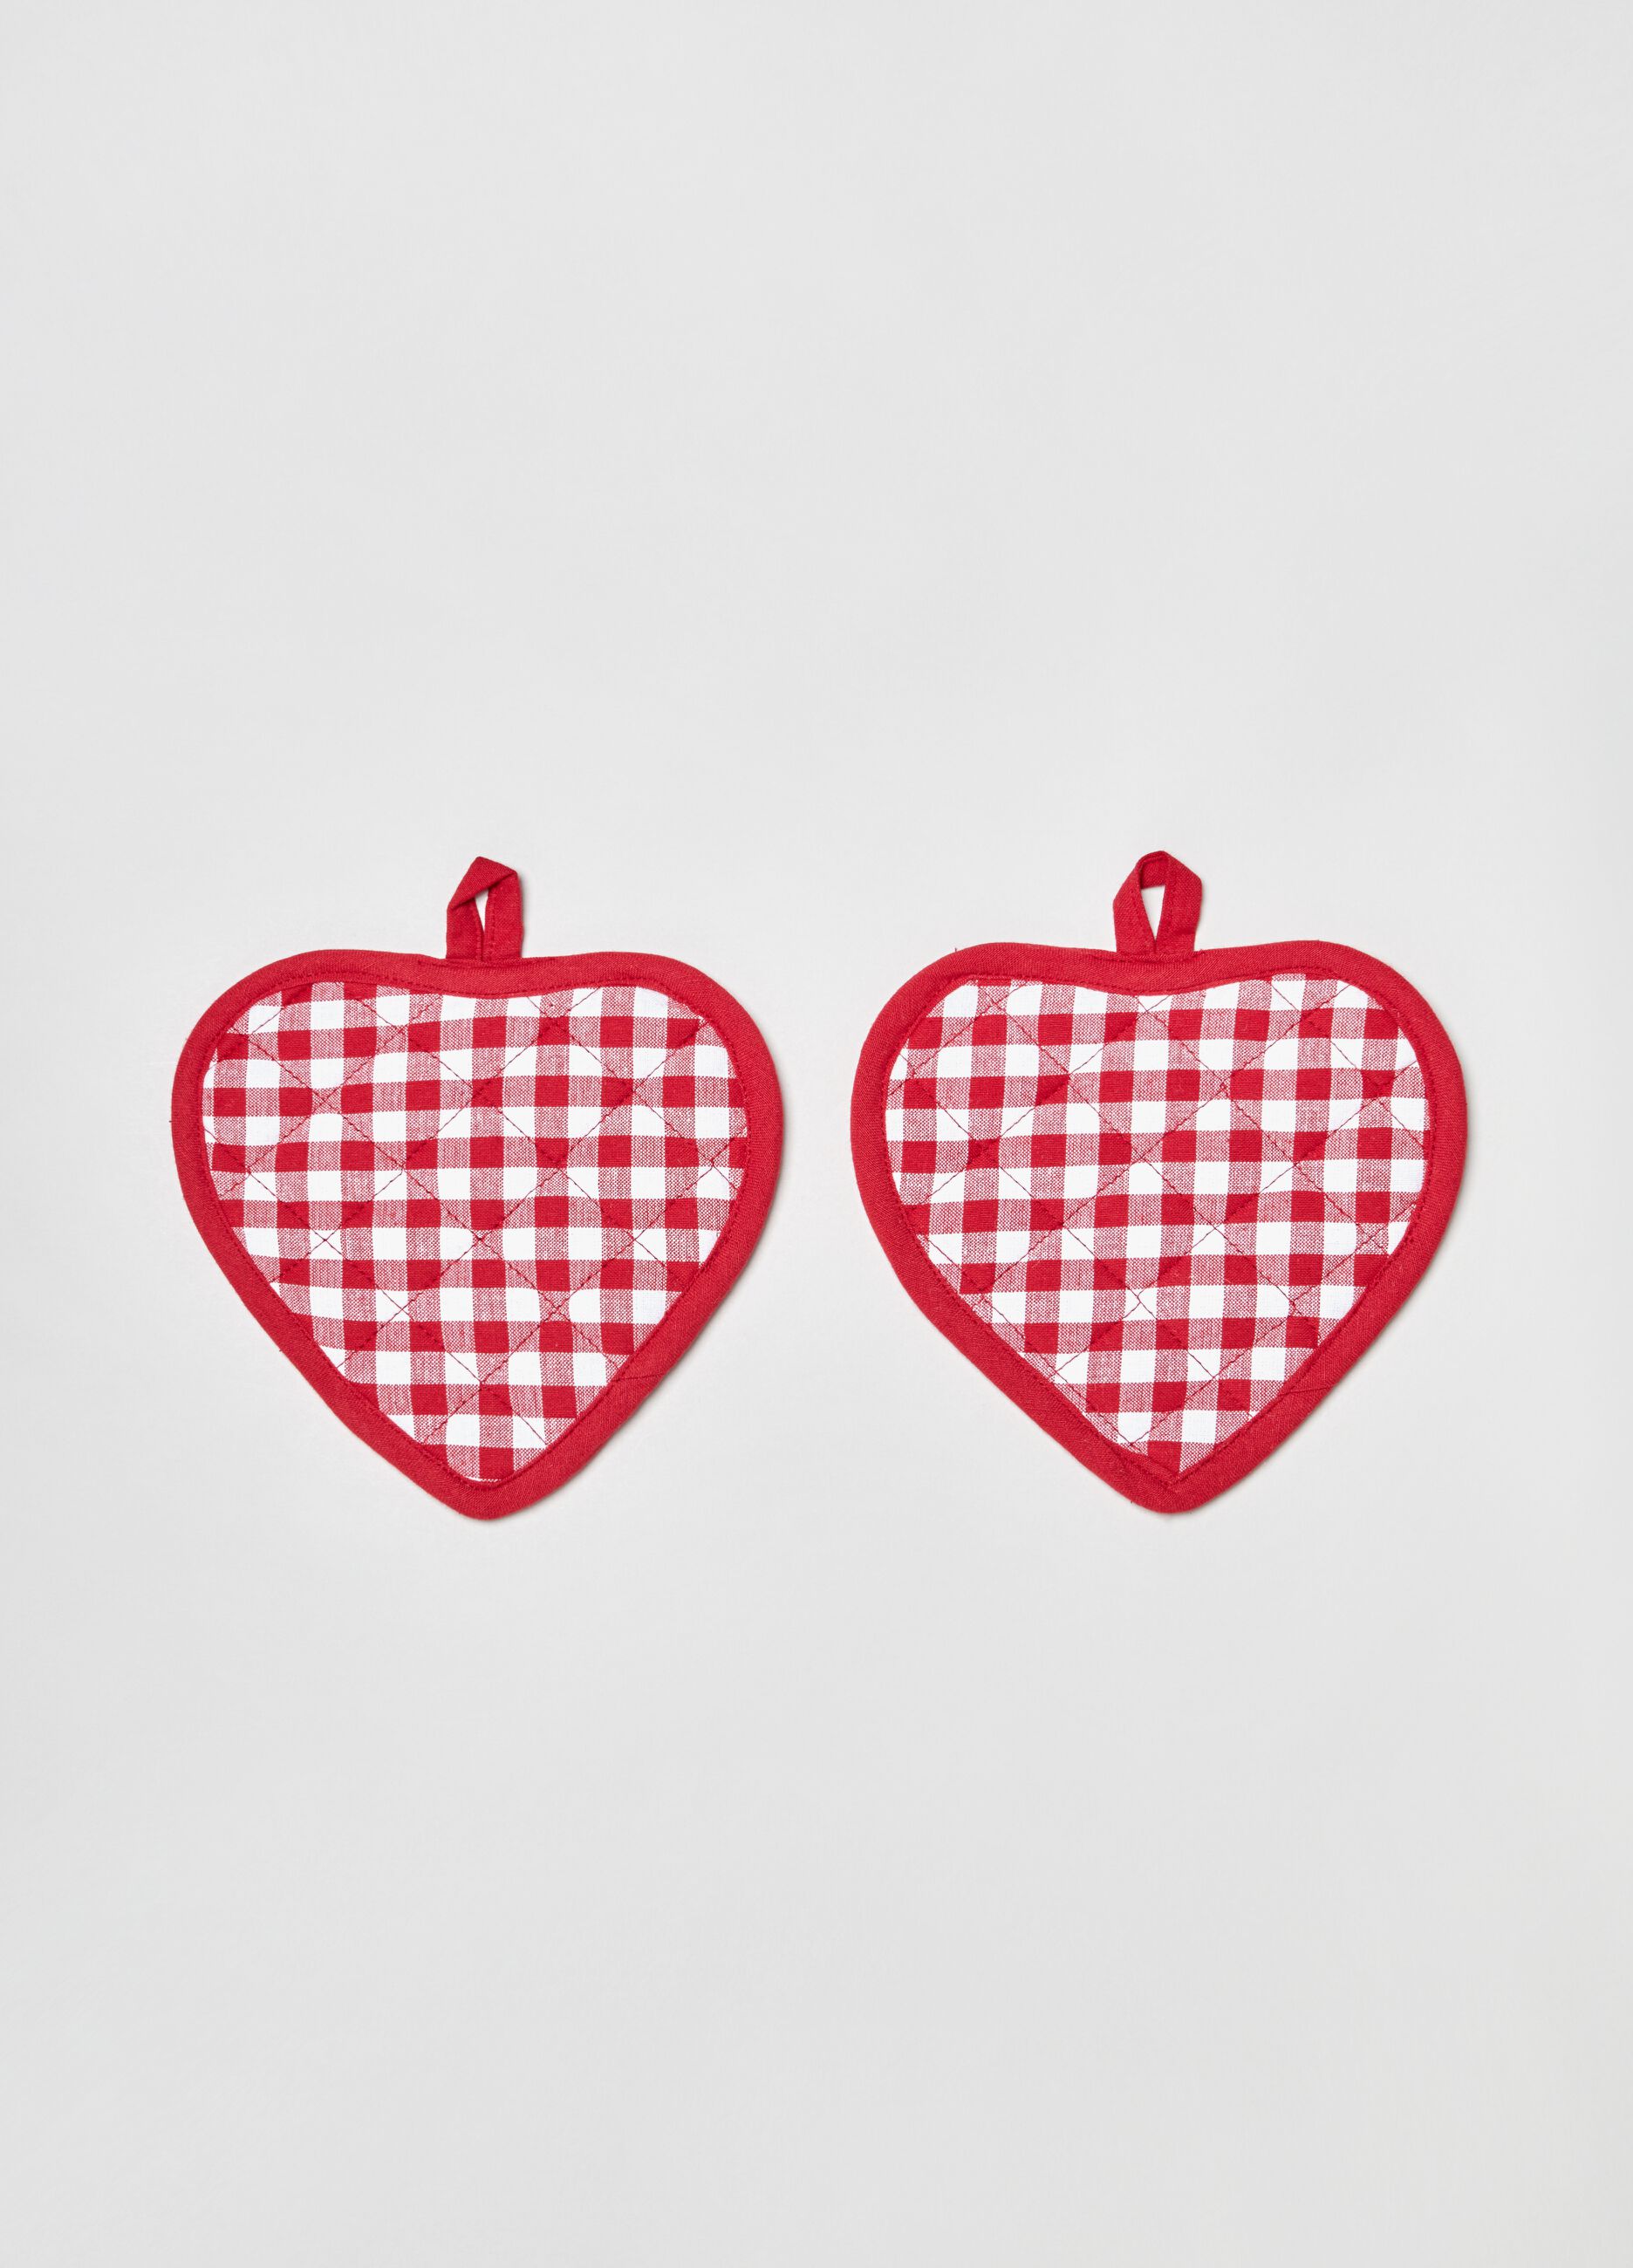 Set 2 heart-shaped gingham pot holders